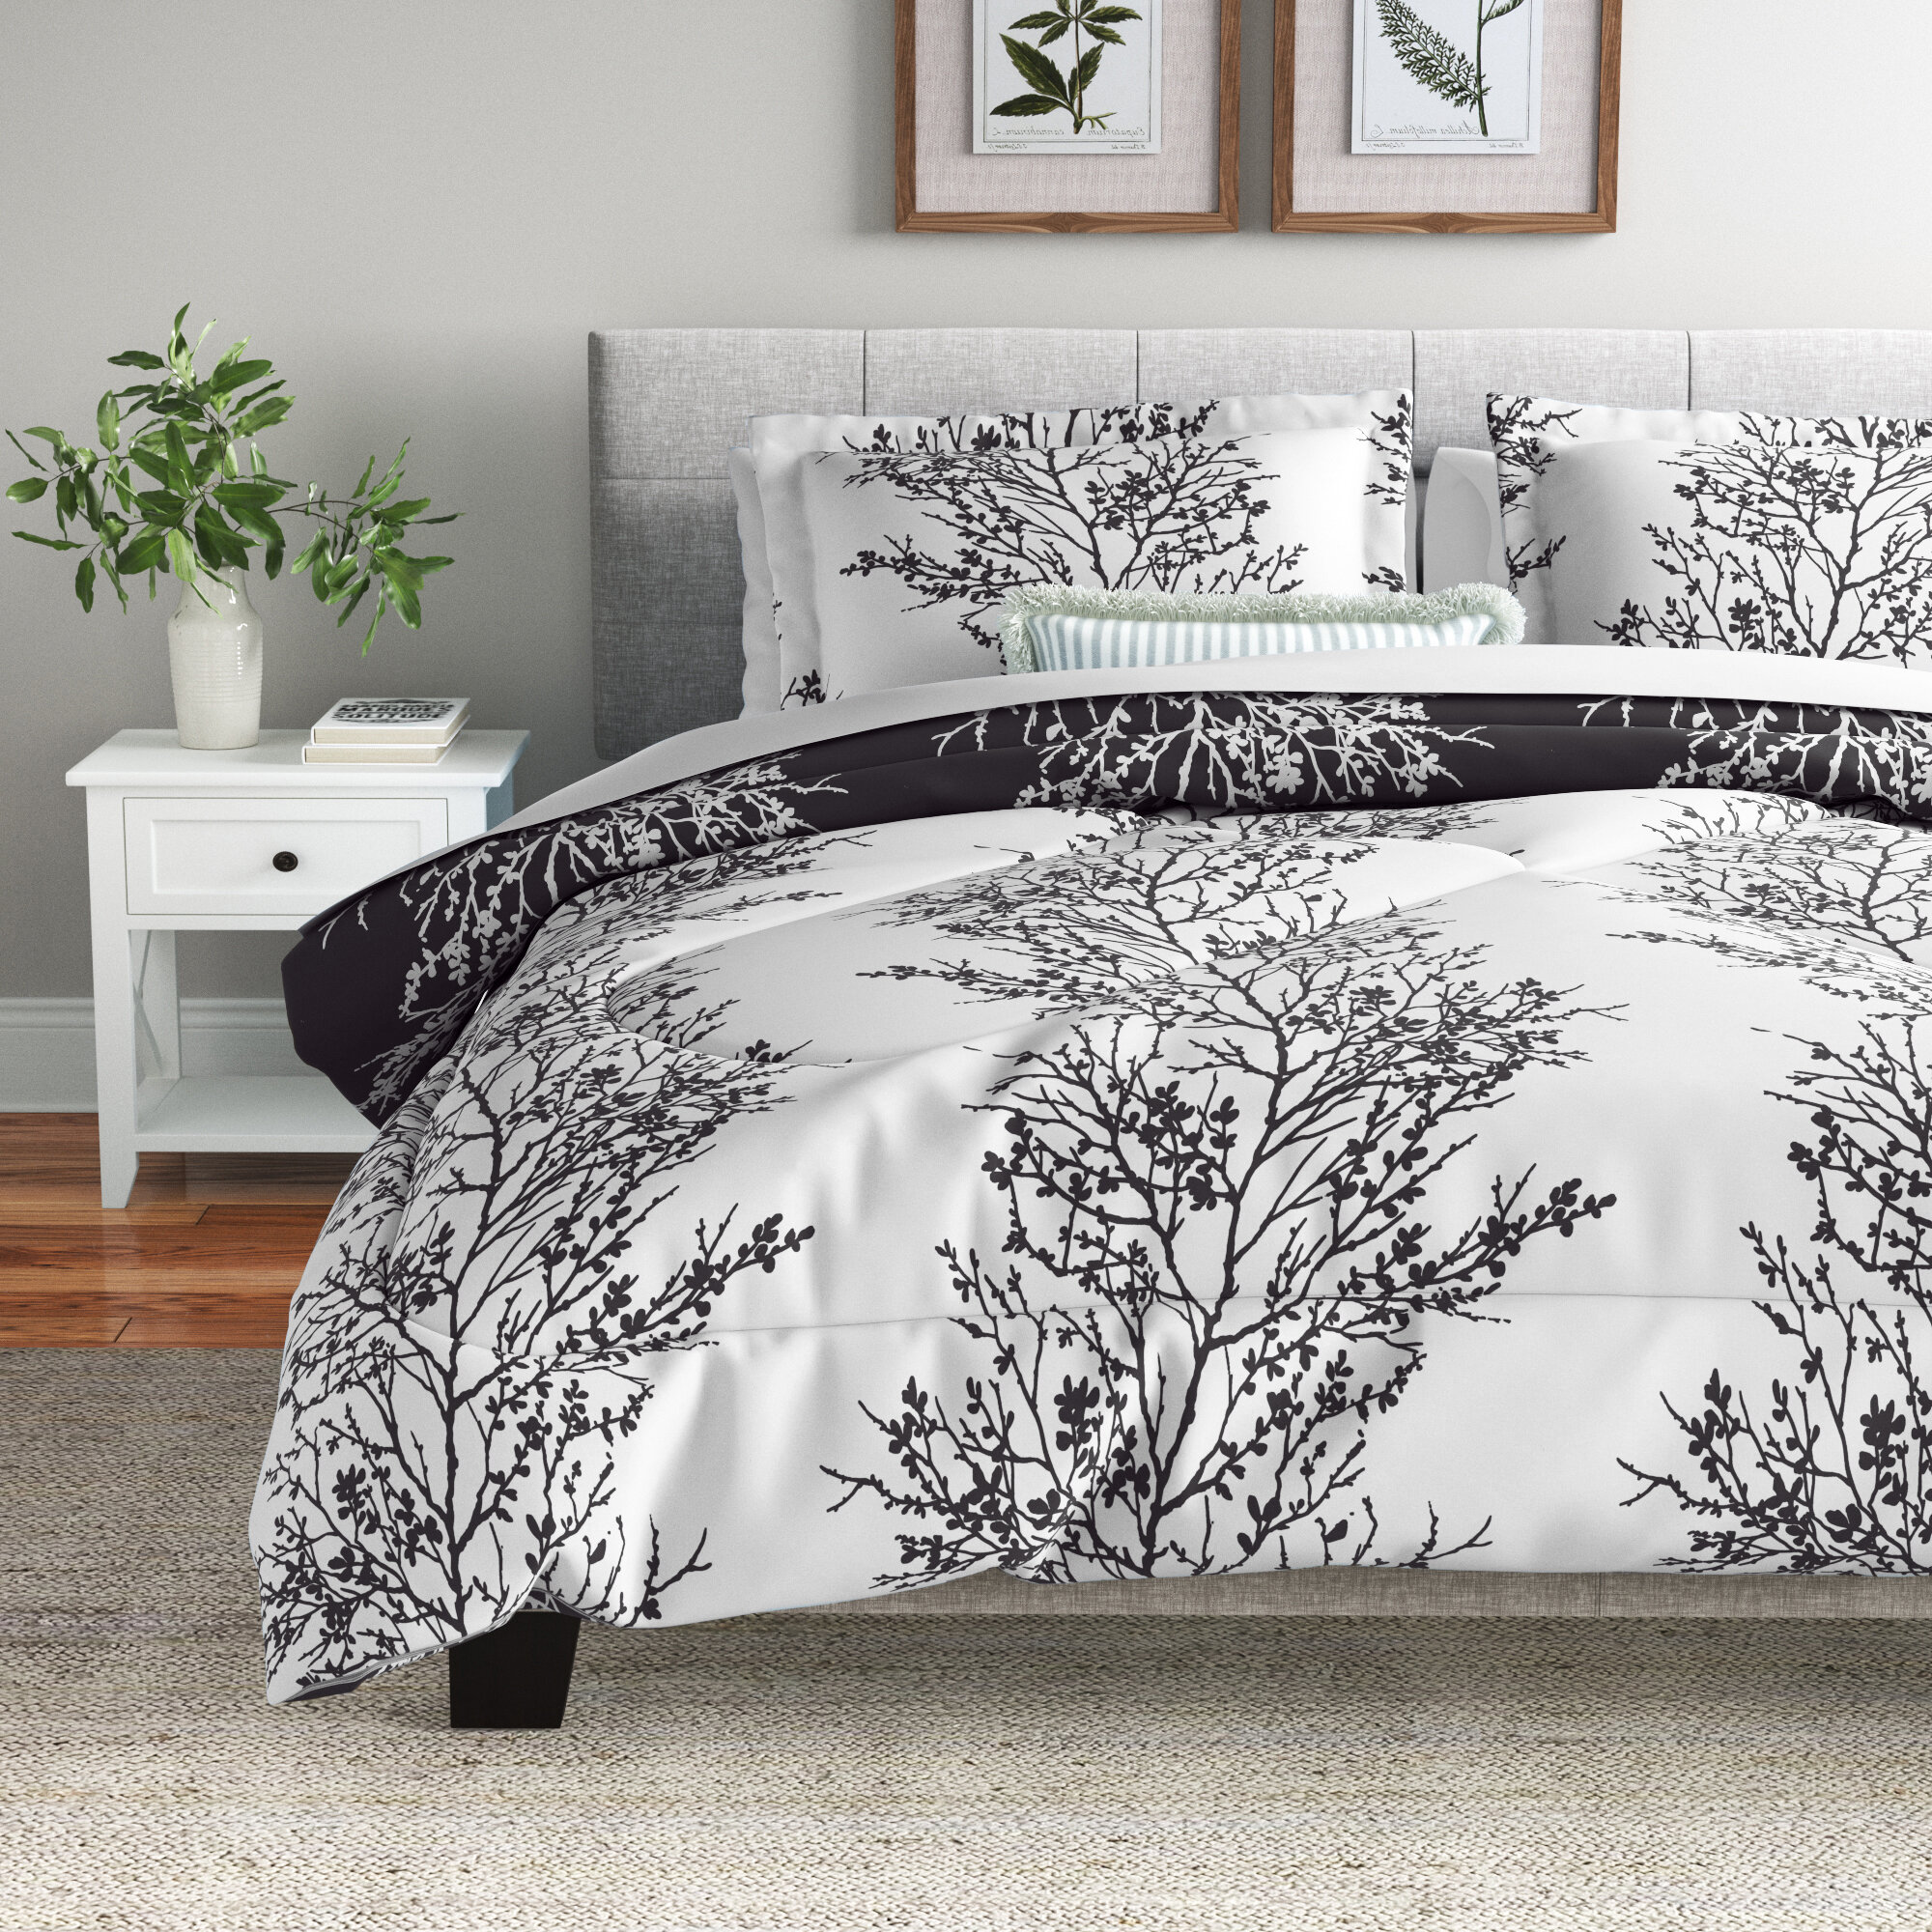 Details about   Ivory 8 Piece  Bed in a Bag Comforter Sheet Set Shams Bedding Microfiber Linens 